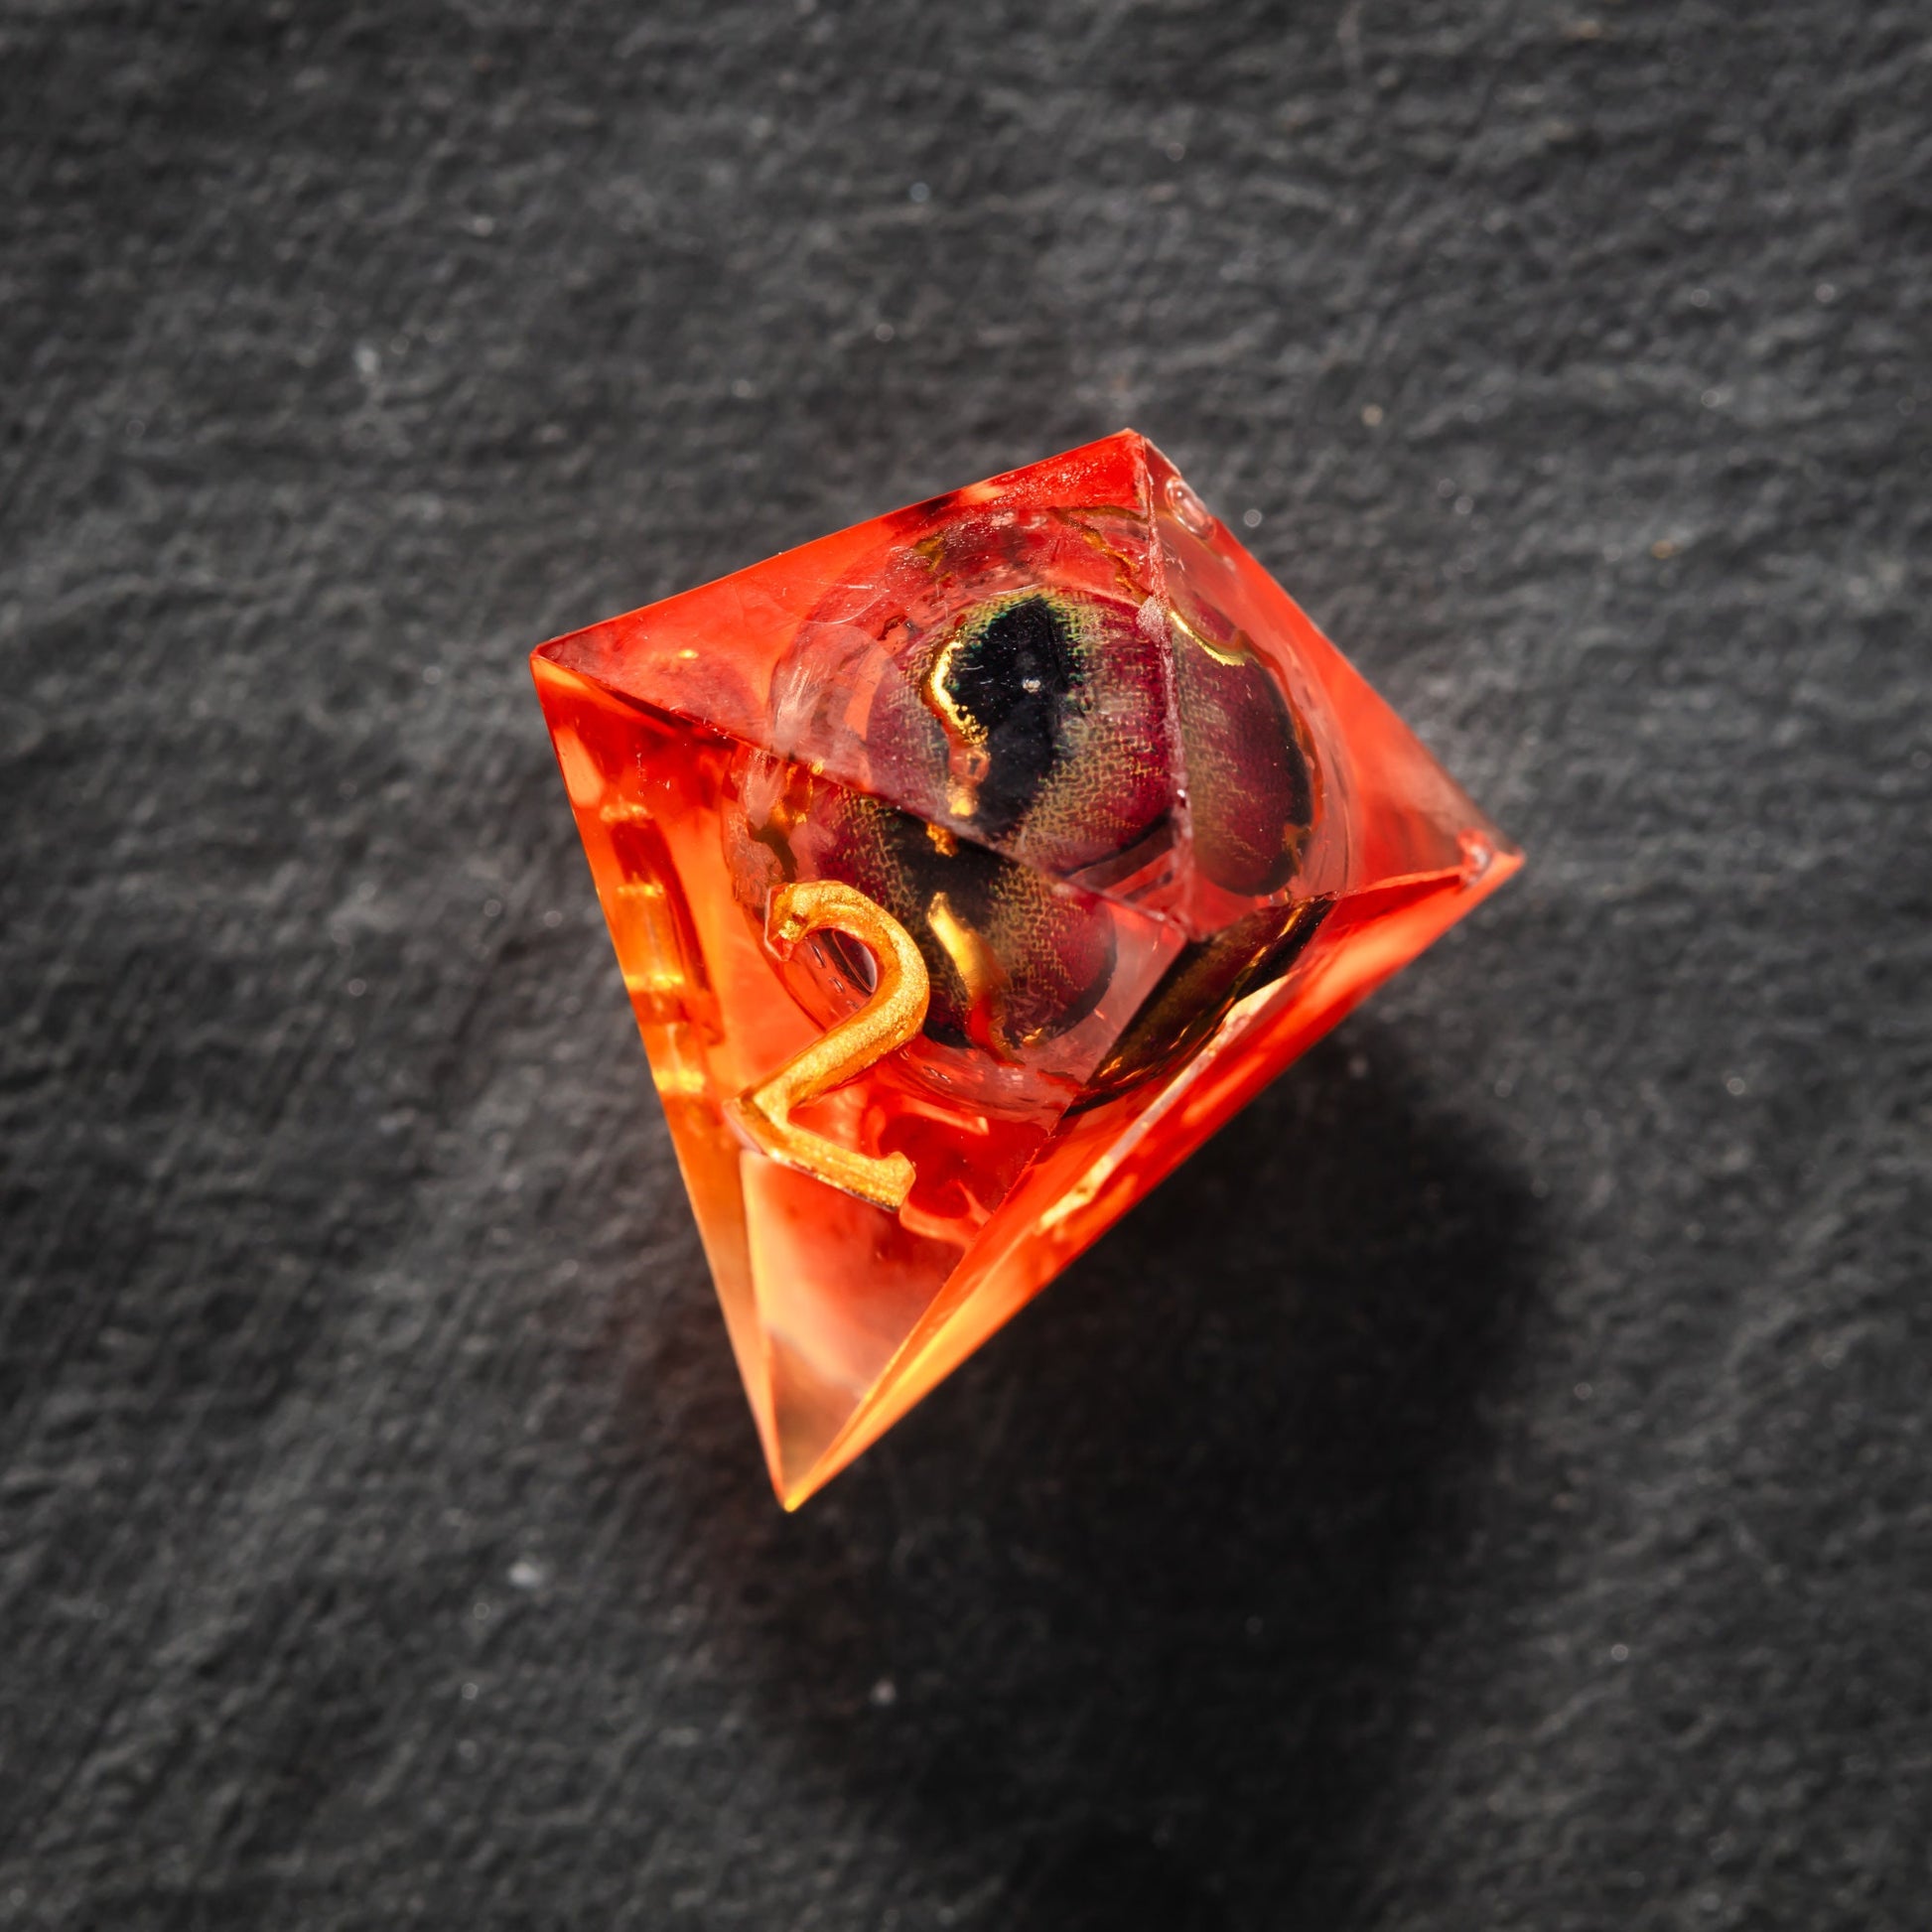 Floating Fire Pupil Dragon's Eye Liquid Core DnD D&D Dice Set - CrystalMaggie